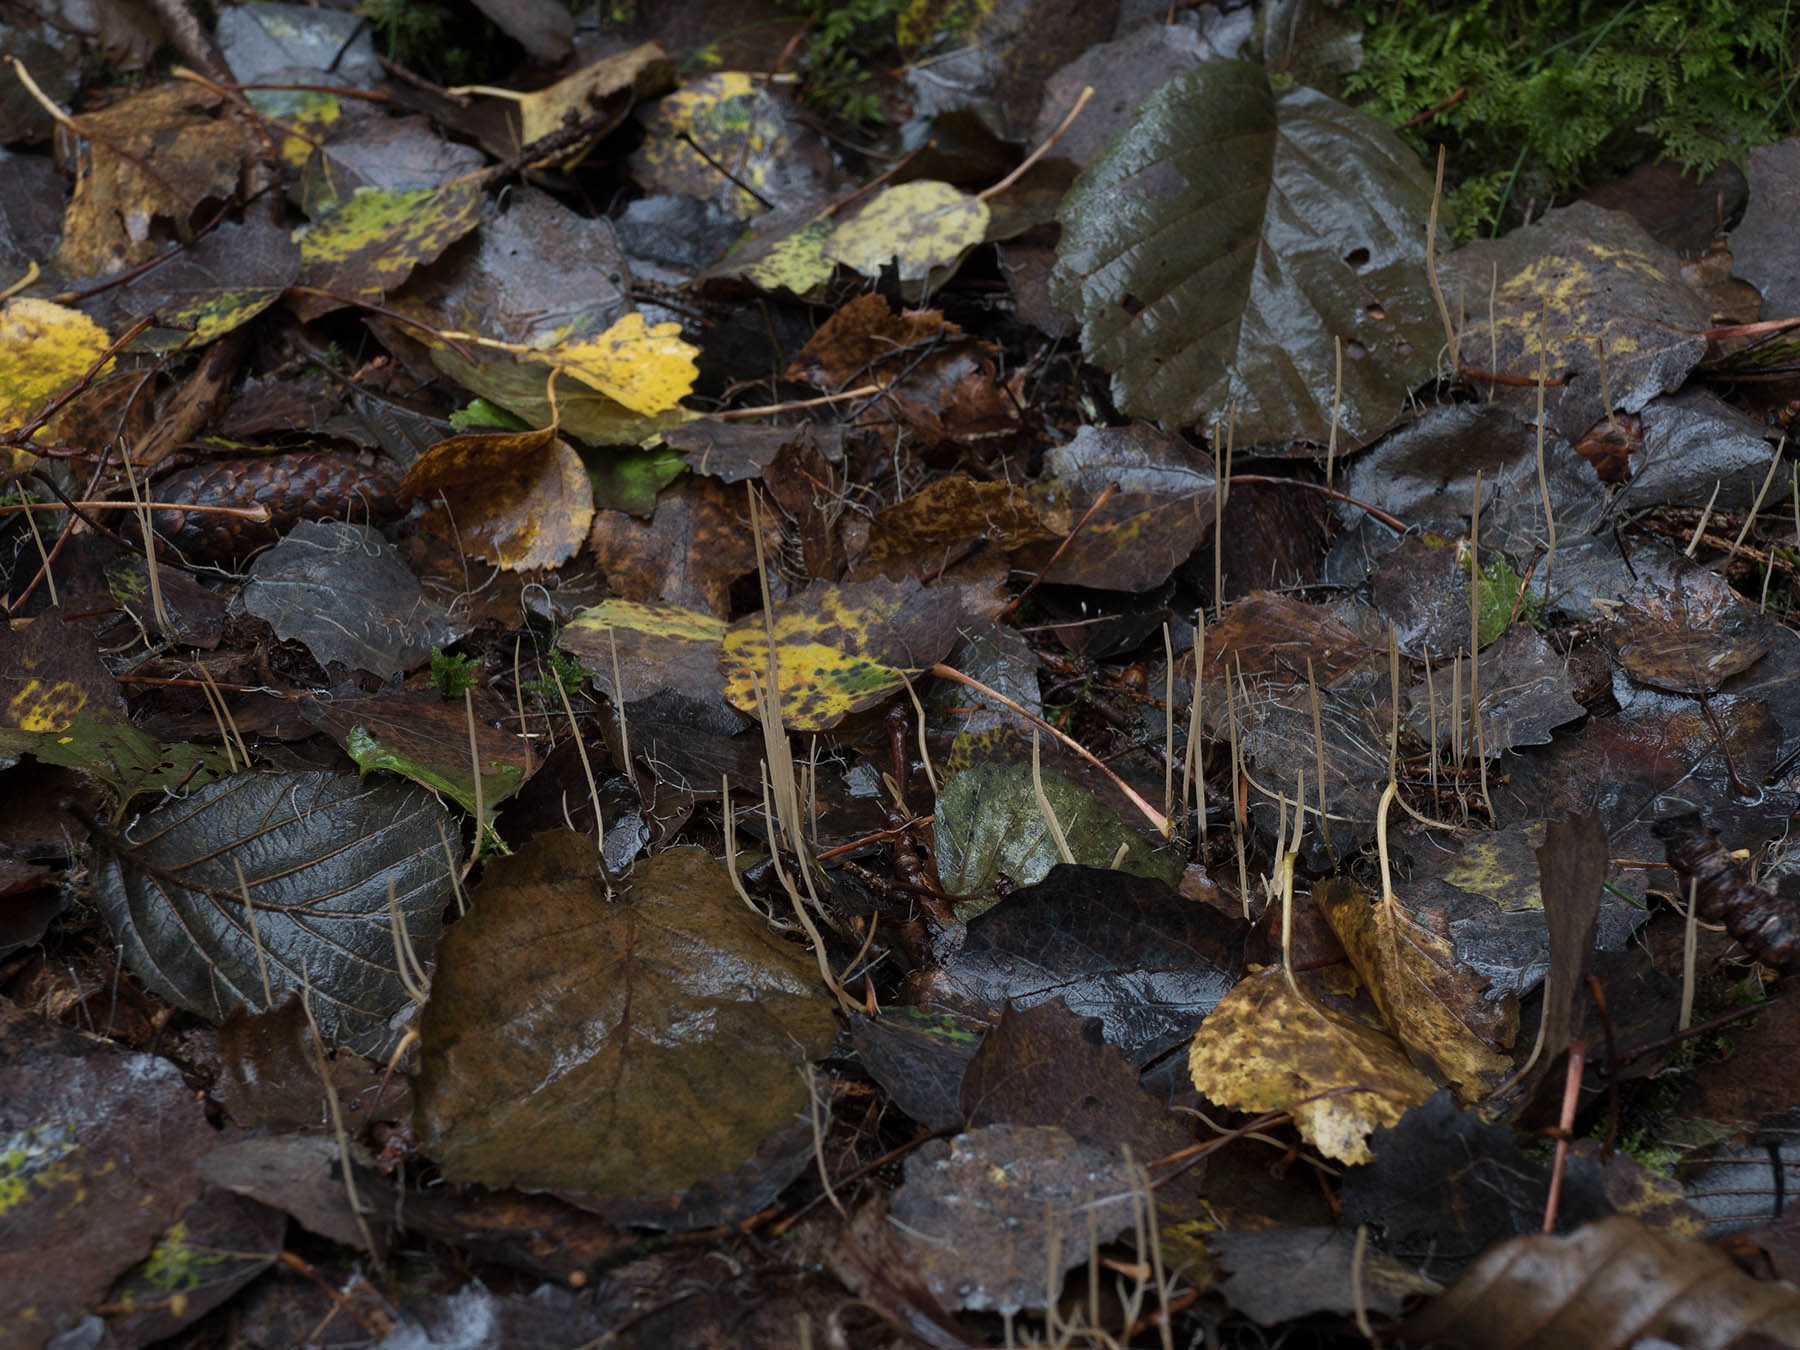 Typhula juncea (синонимы: Macrotyphula juncea, Clavariadelphus junceus) растущие на лиственном опаде в природном парке G?rv?lns naturreservat, октябрь 2019 года. Автор фото: Сутормина Марина